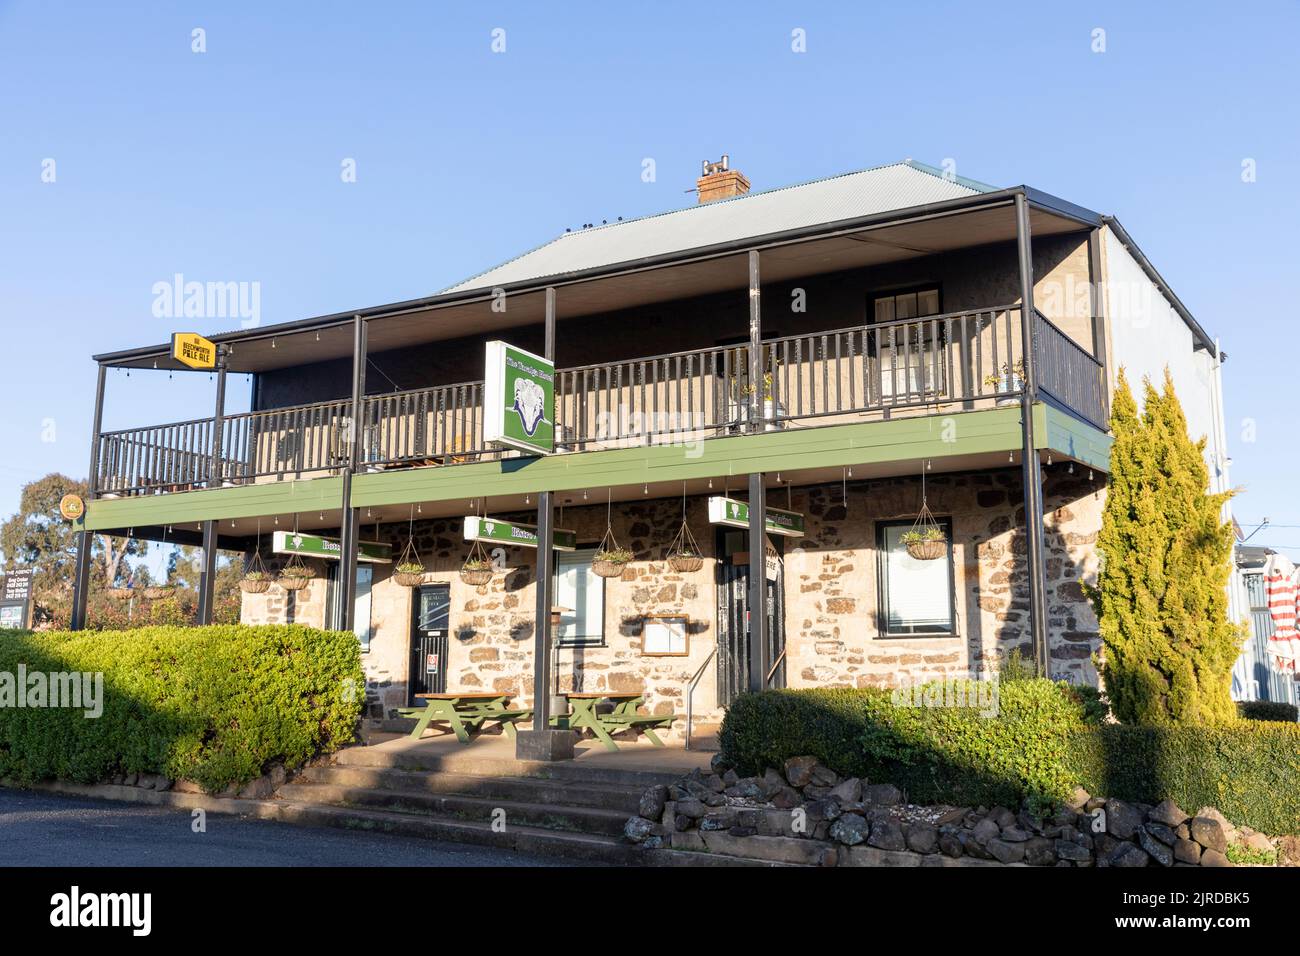 Taralga hotel and pub in the village of Taralga, regional new south wales,NSW,Australia Stock Photo